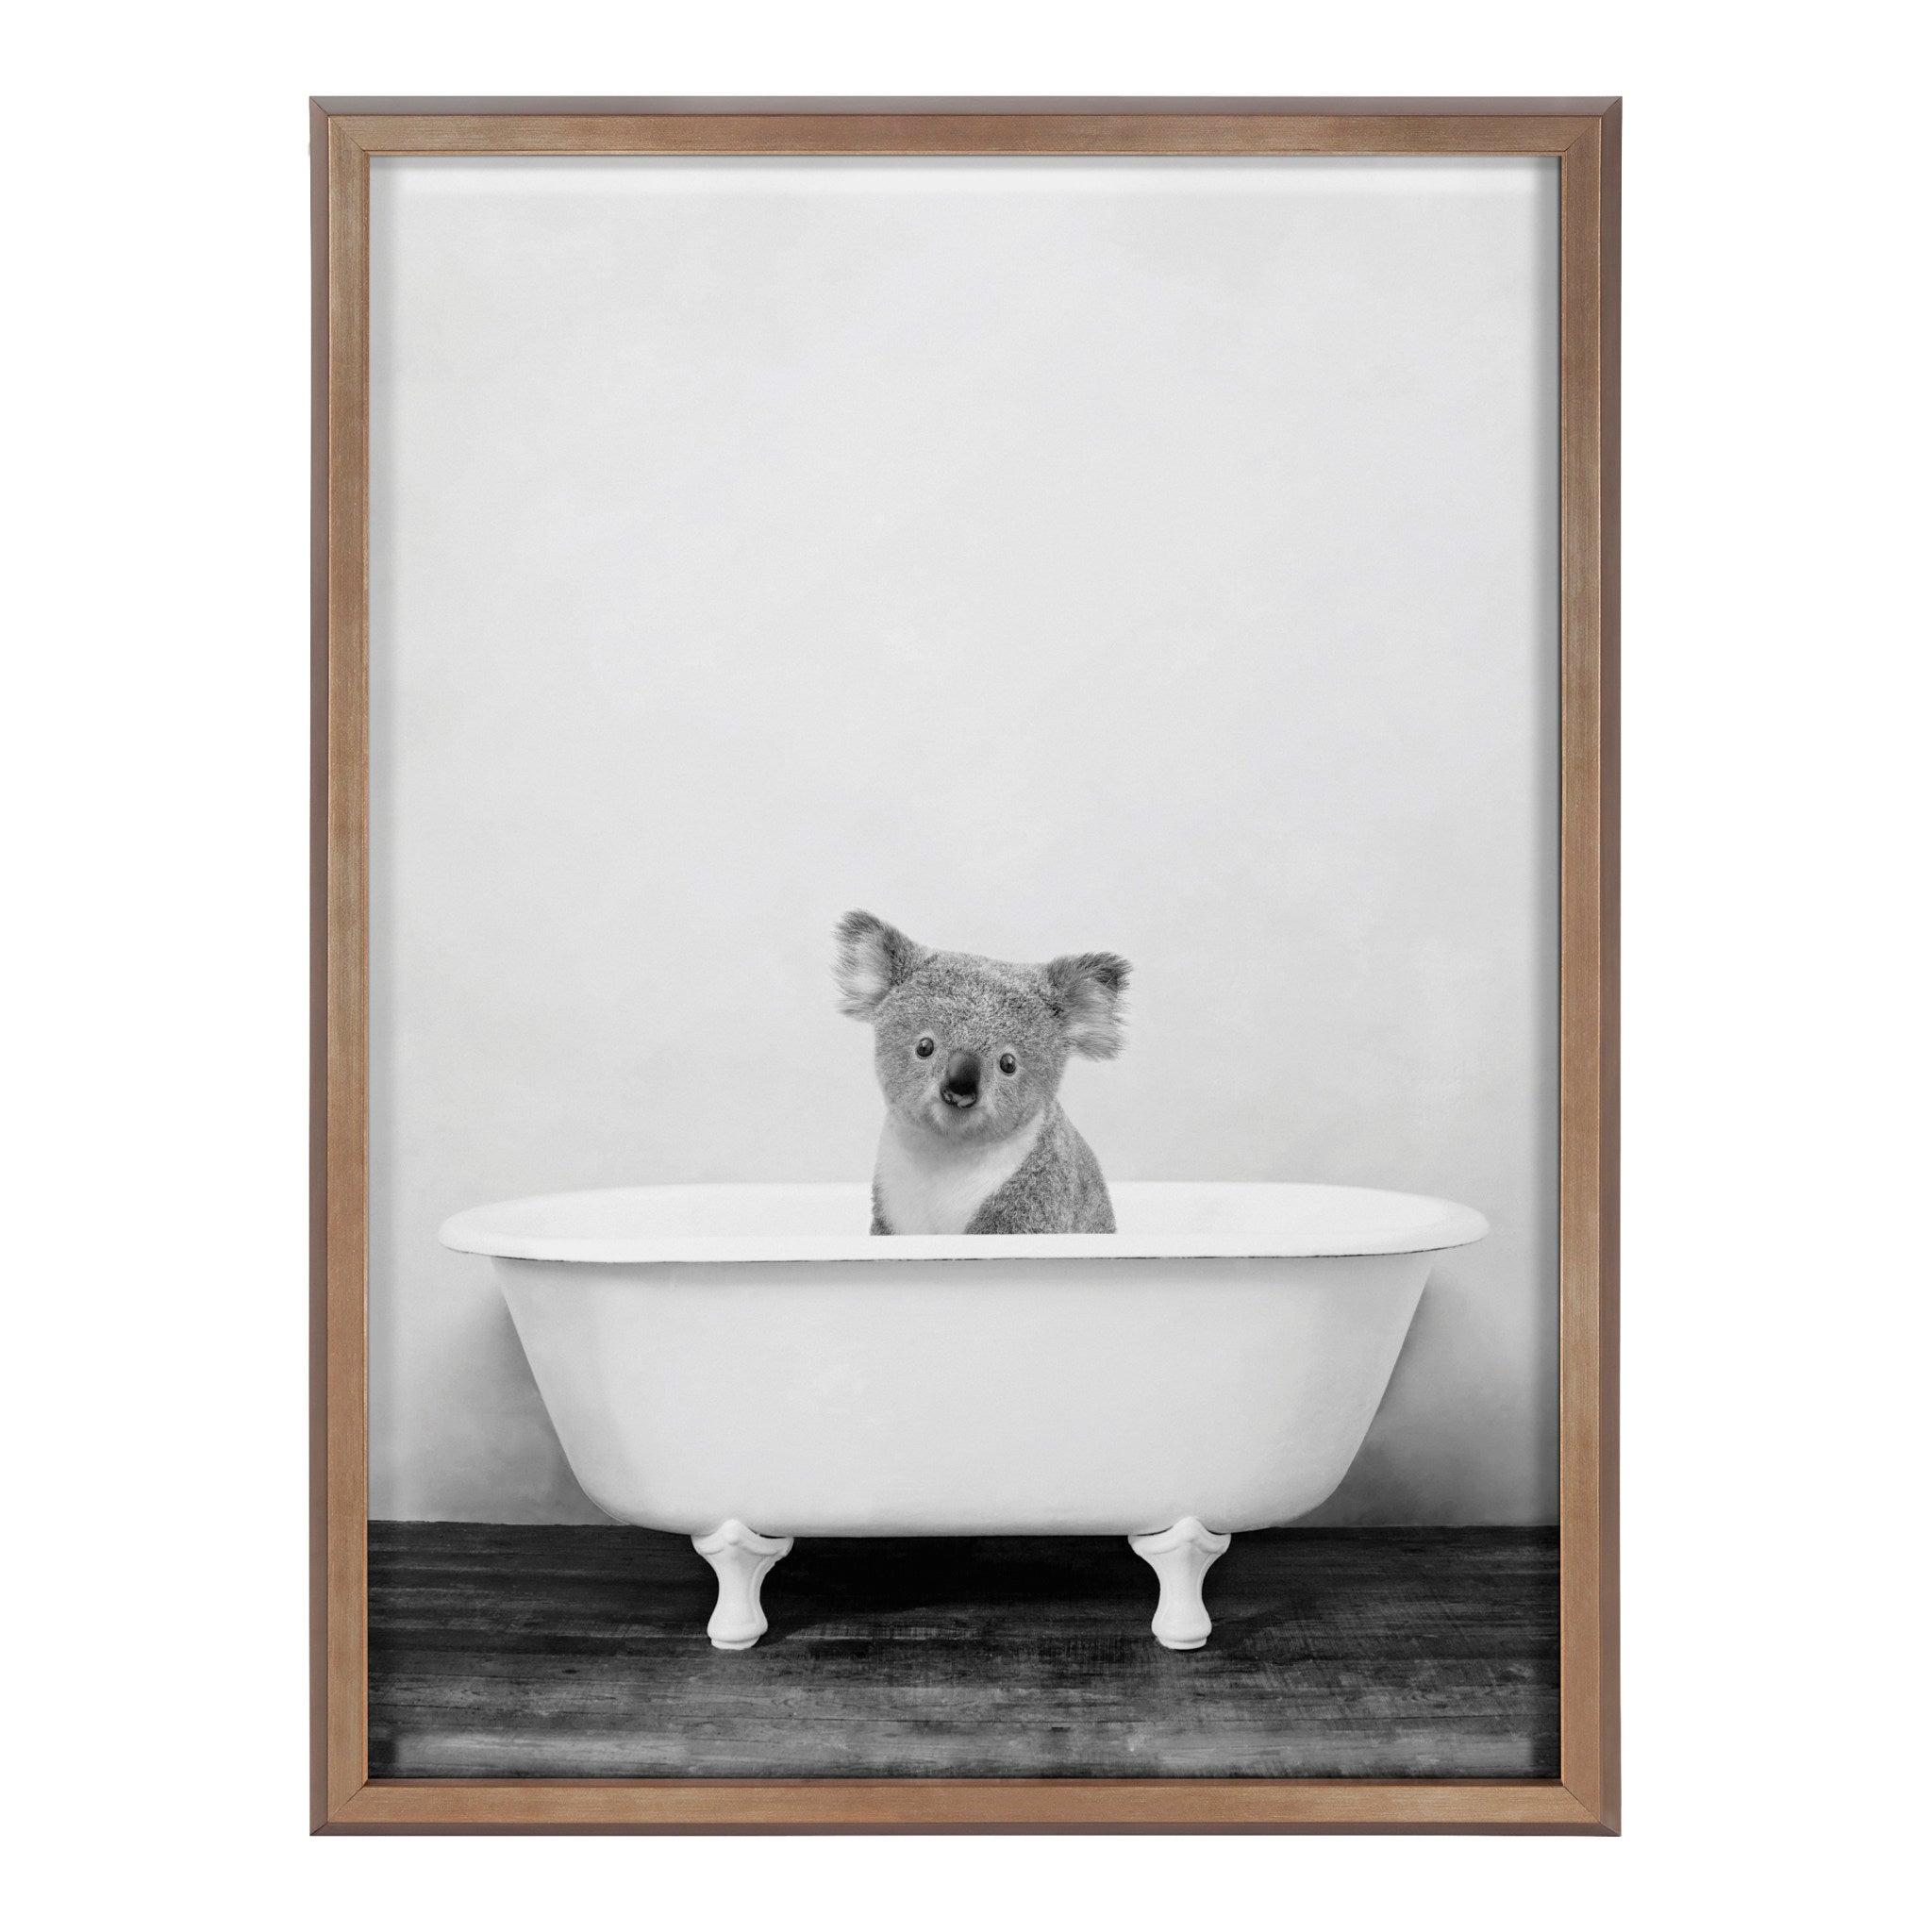 Blake Koala in Bathtub Black and White Framed Printed Glass by Amy Peterson